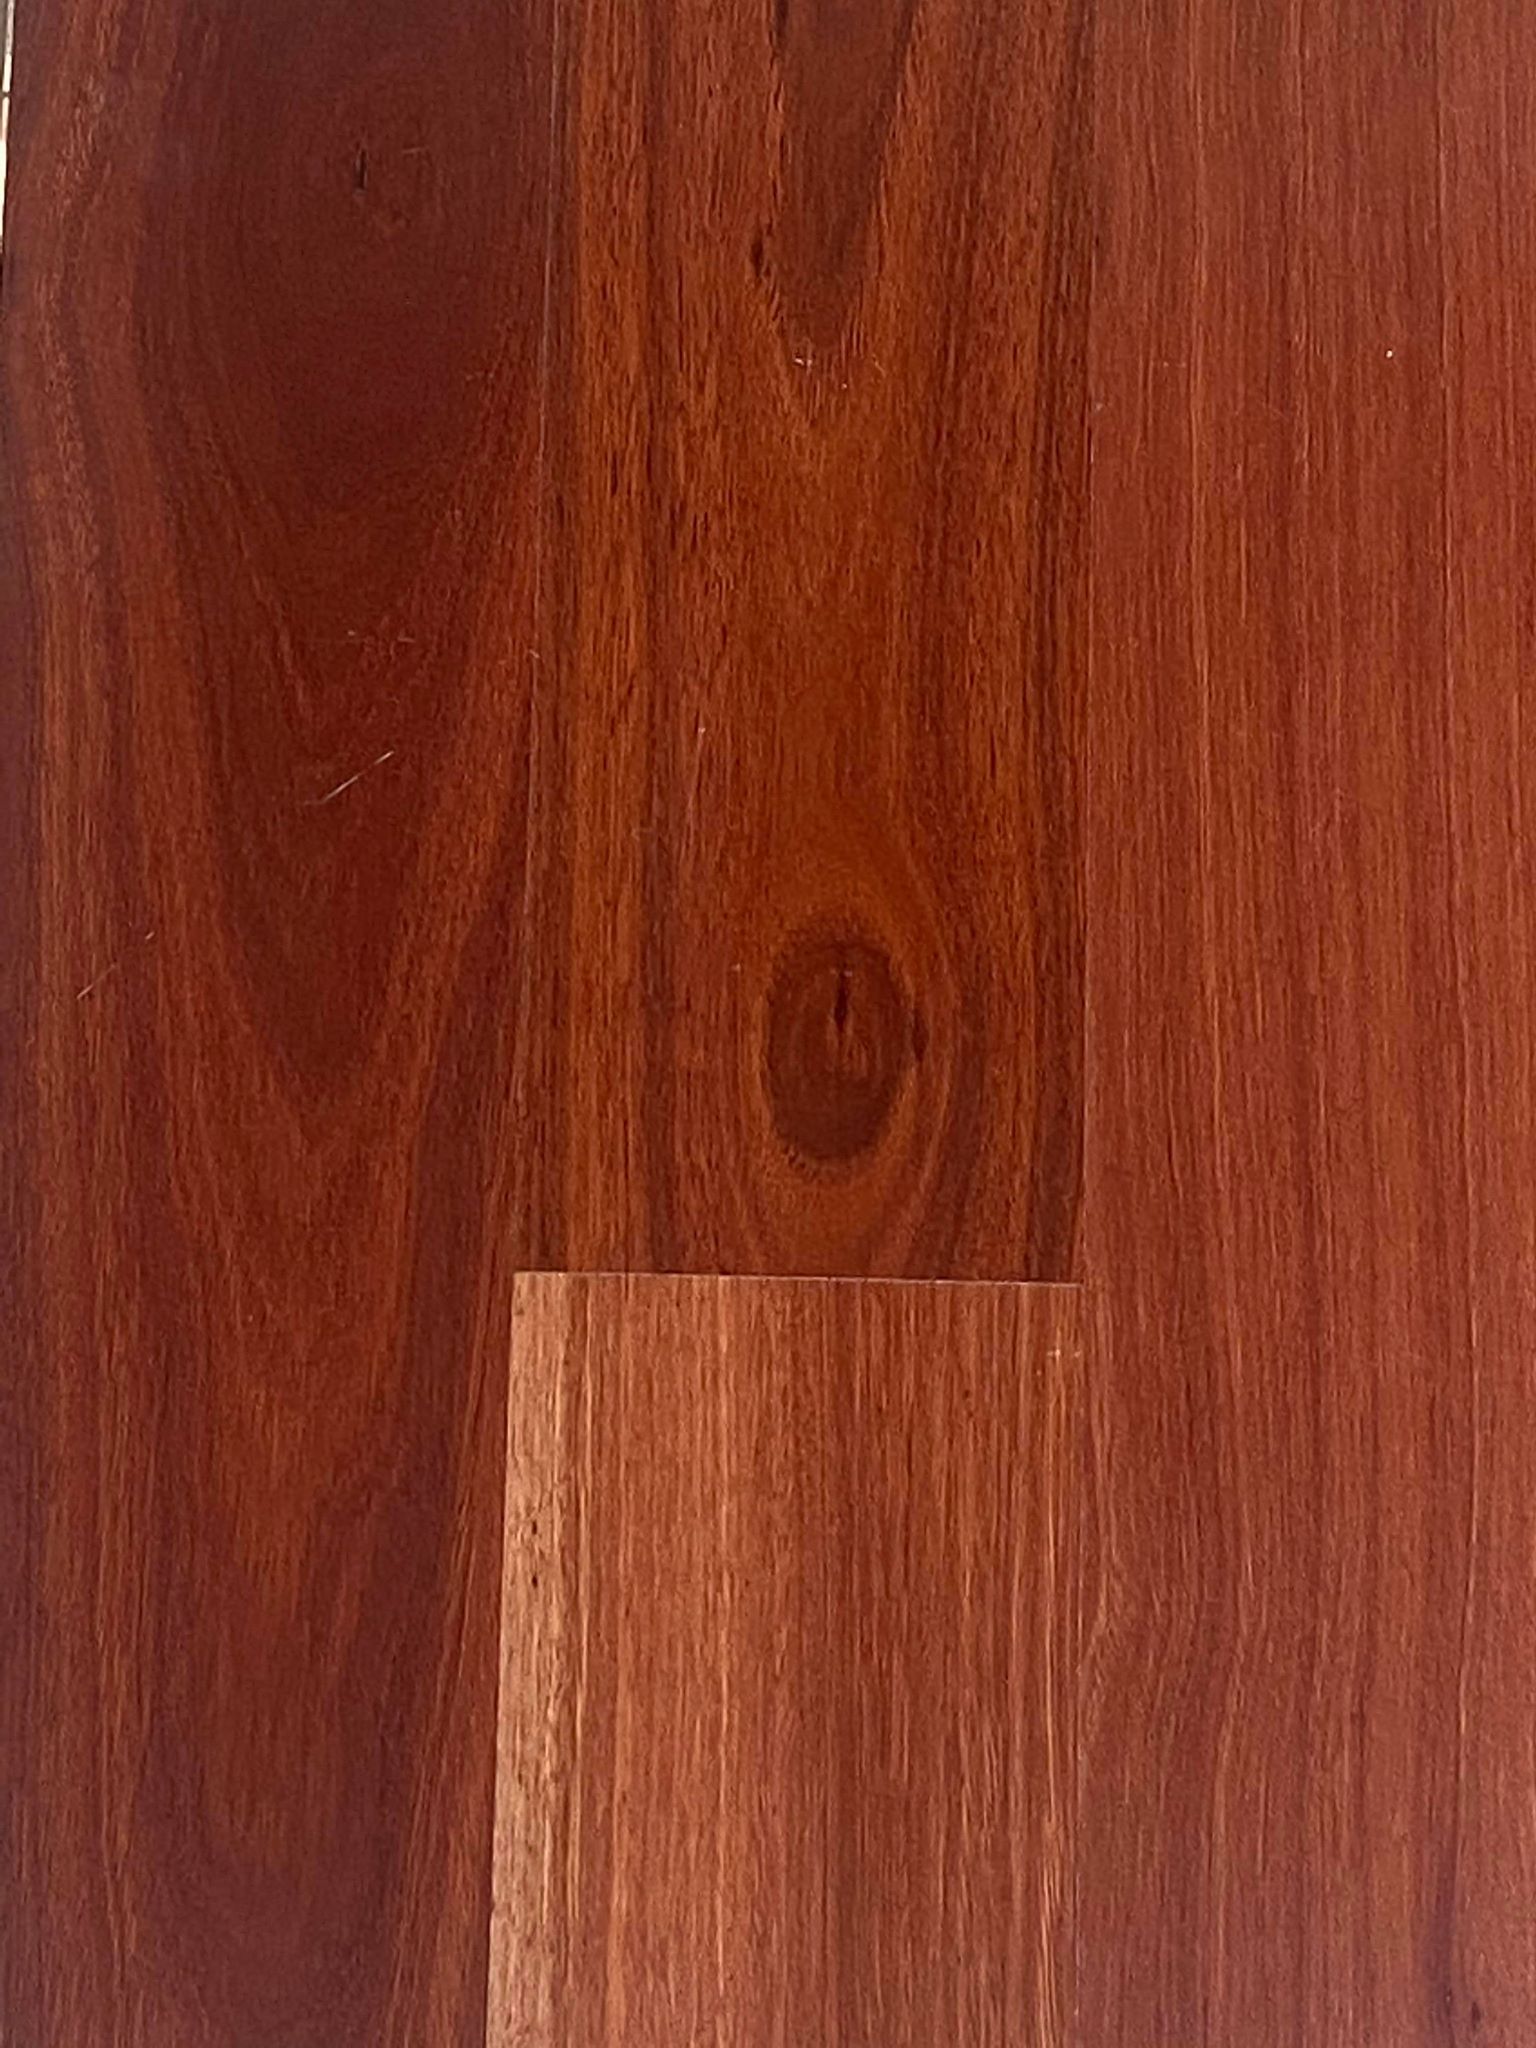 Select Jarrah Engineered Timber, Thomasville Jatoba Hardwood Flooring